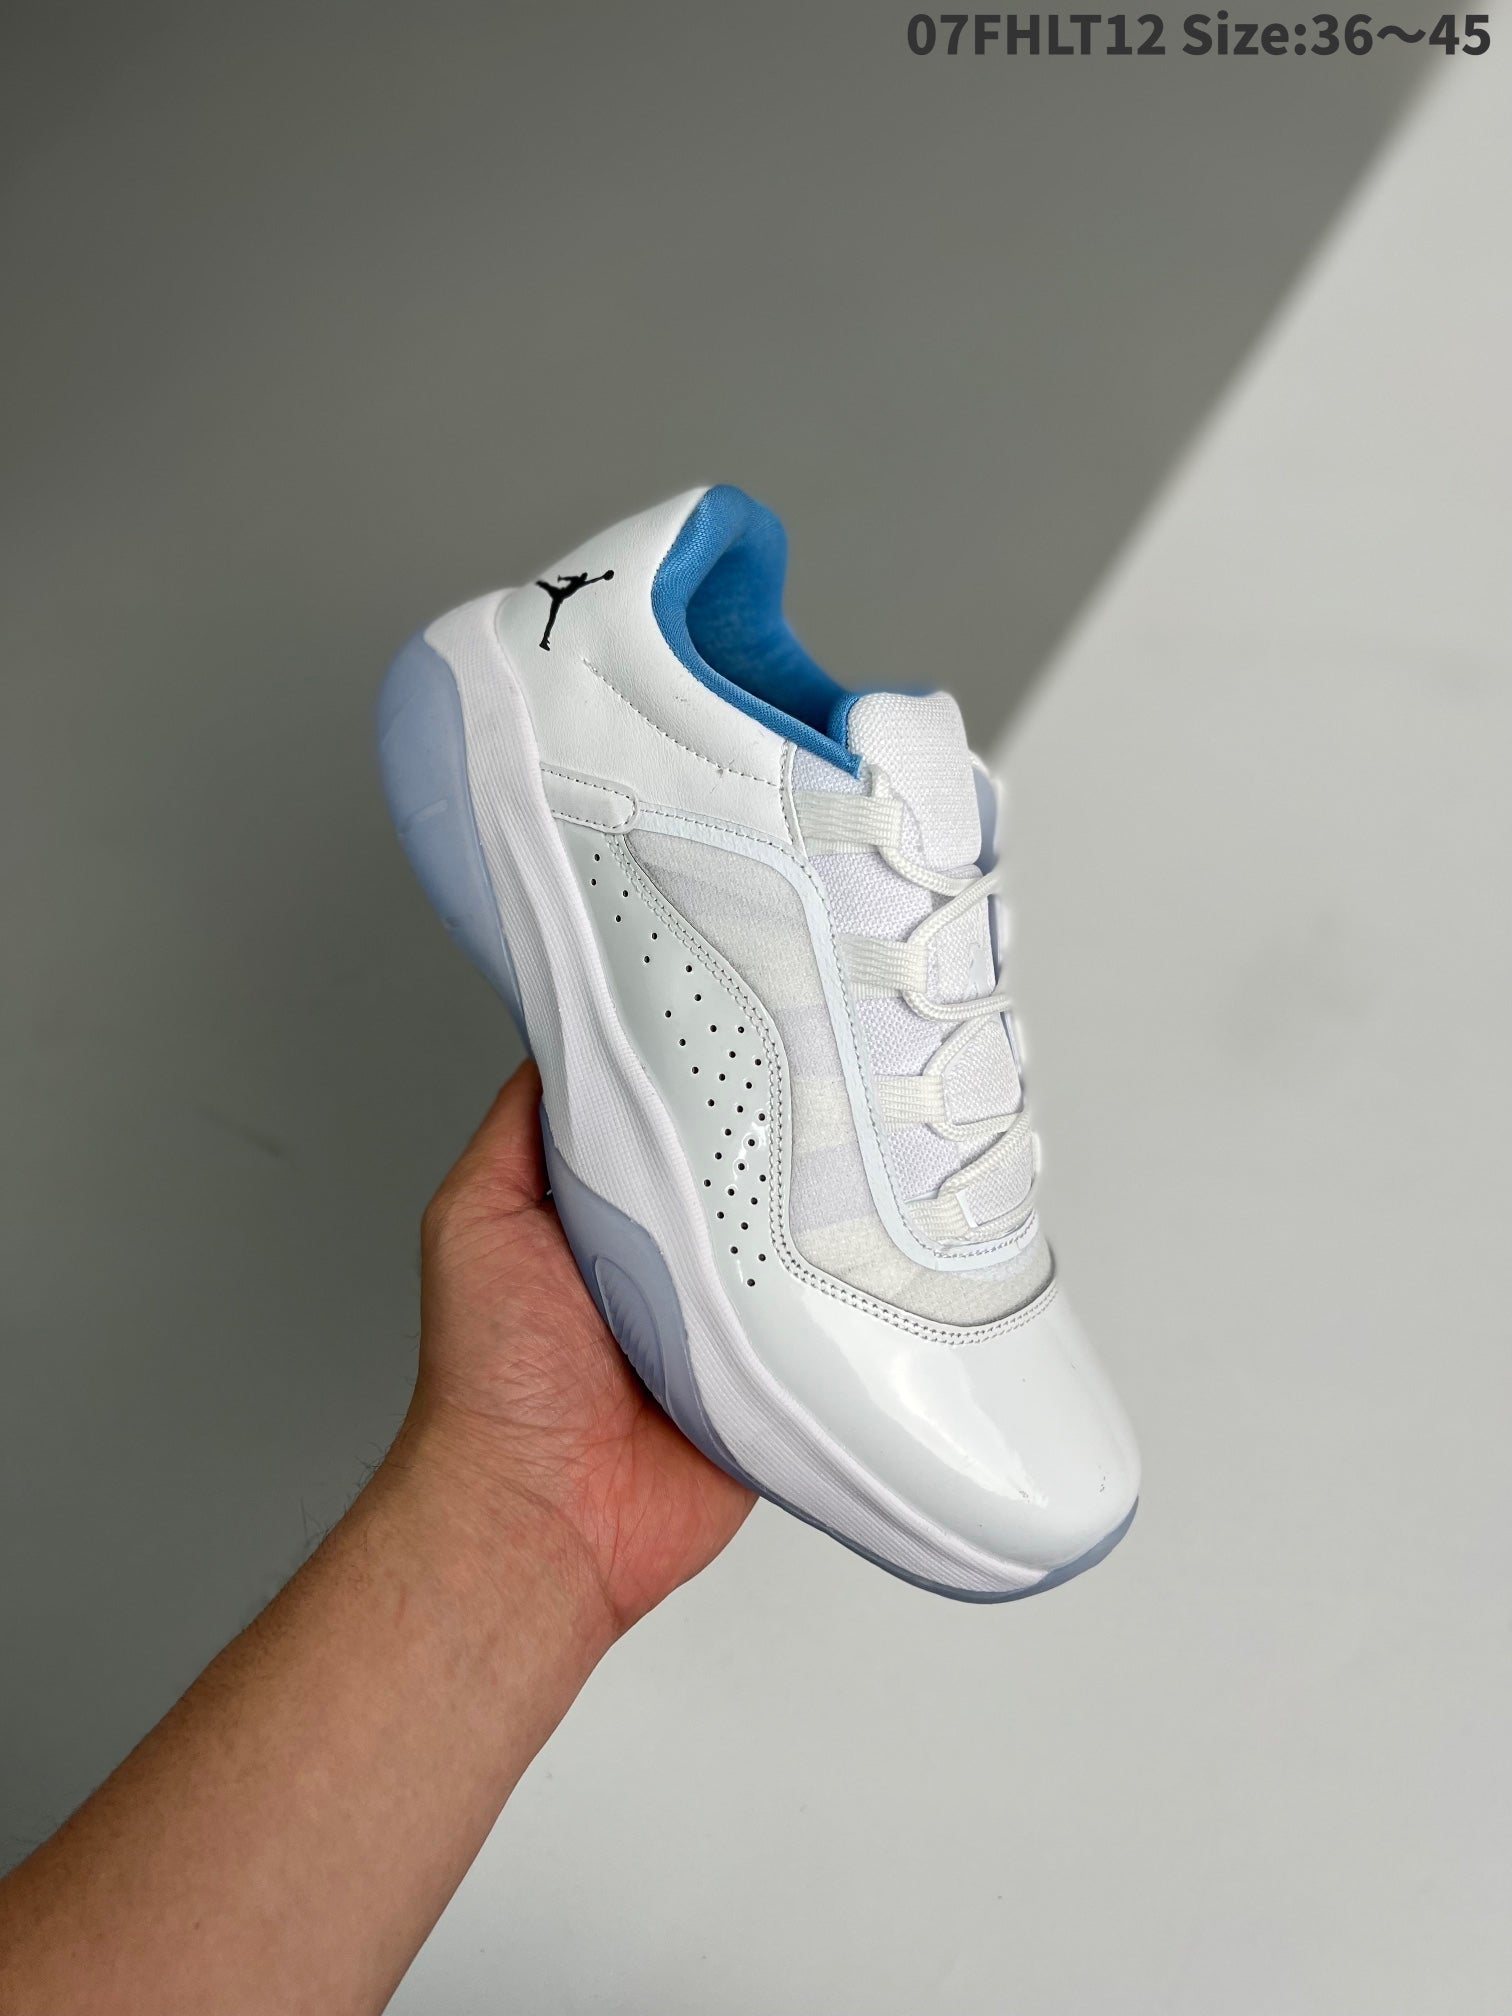 Air Jordan 11 Running Shoes Fashion Sneakers Men's and Women